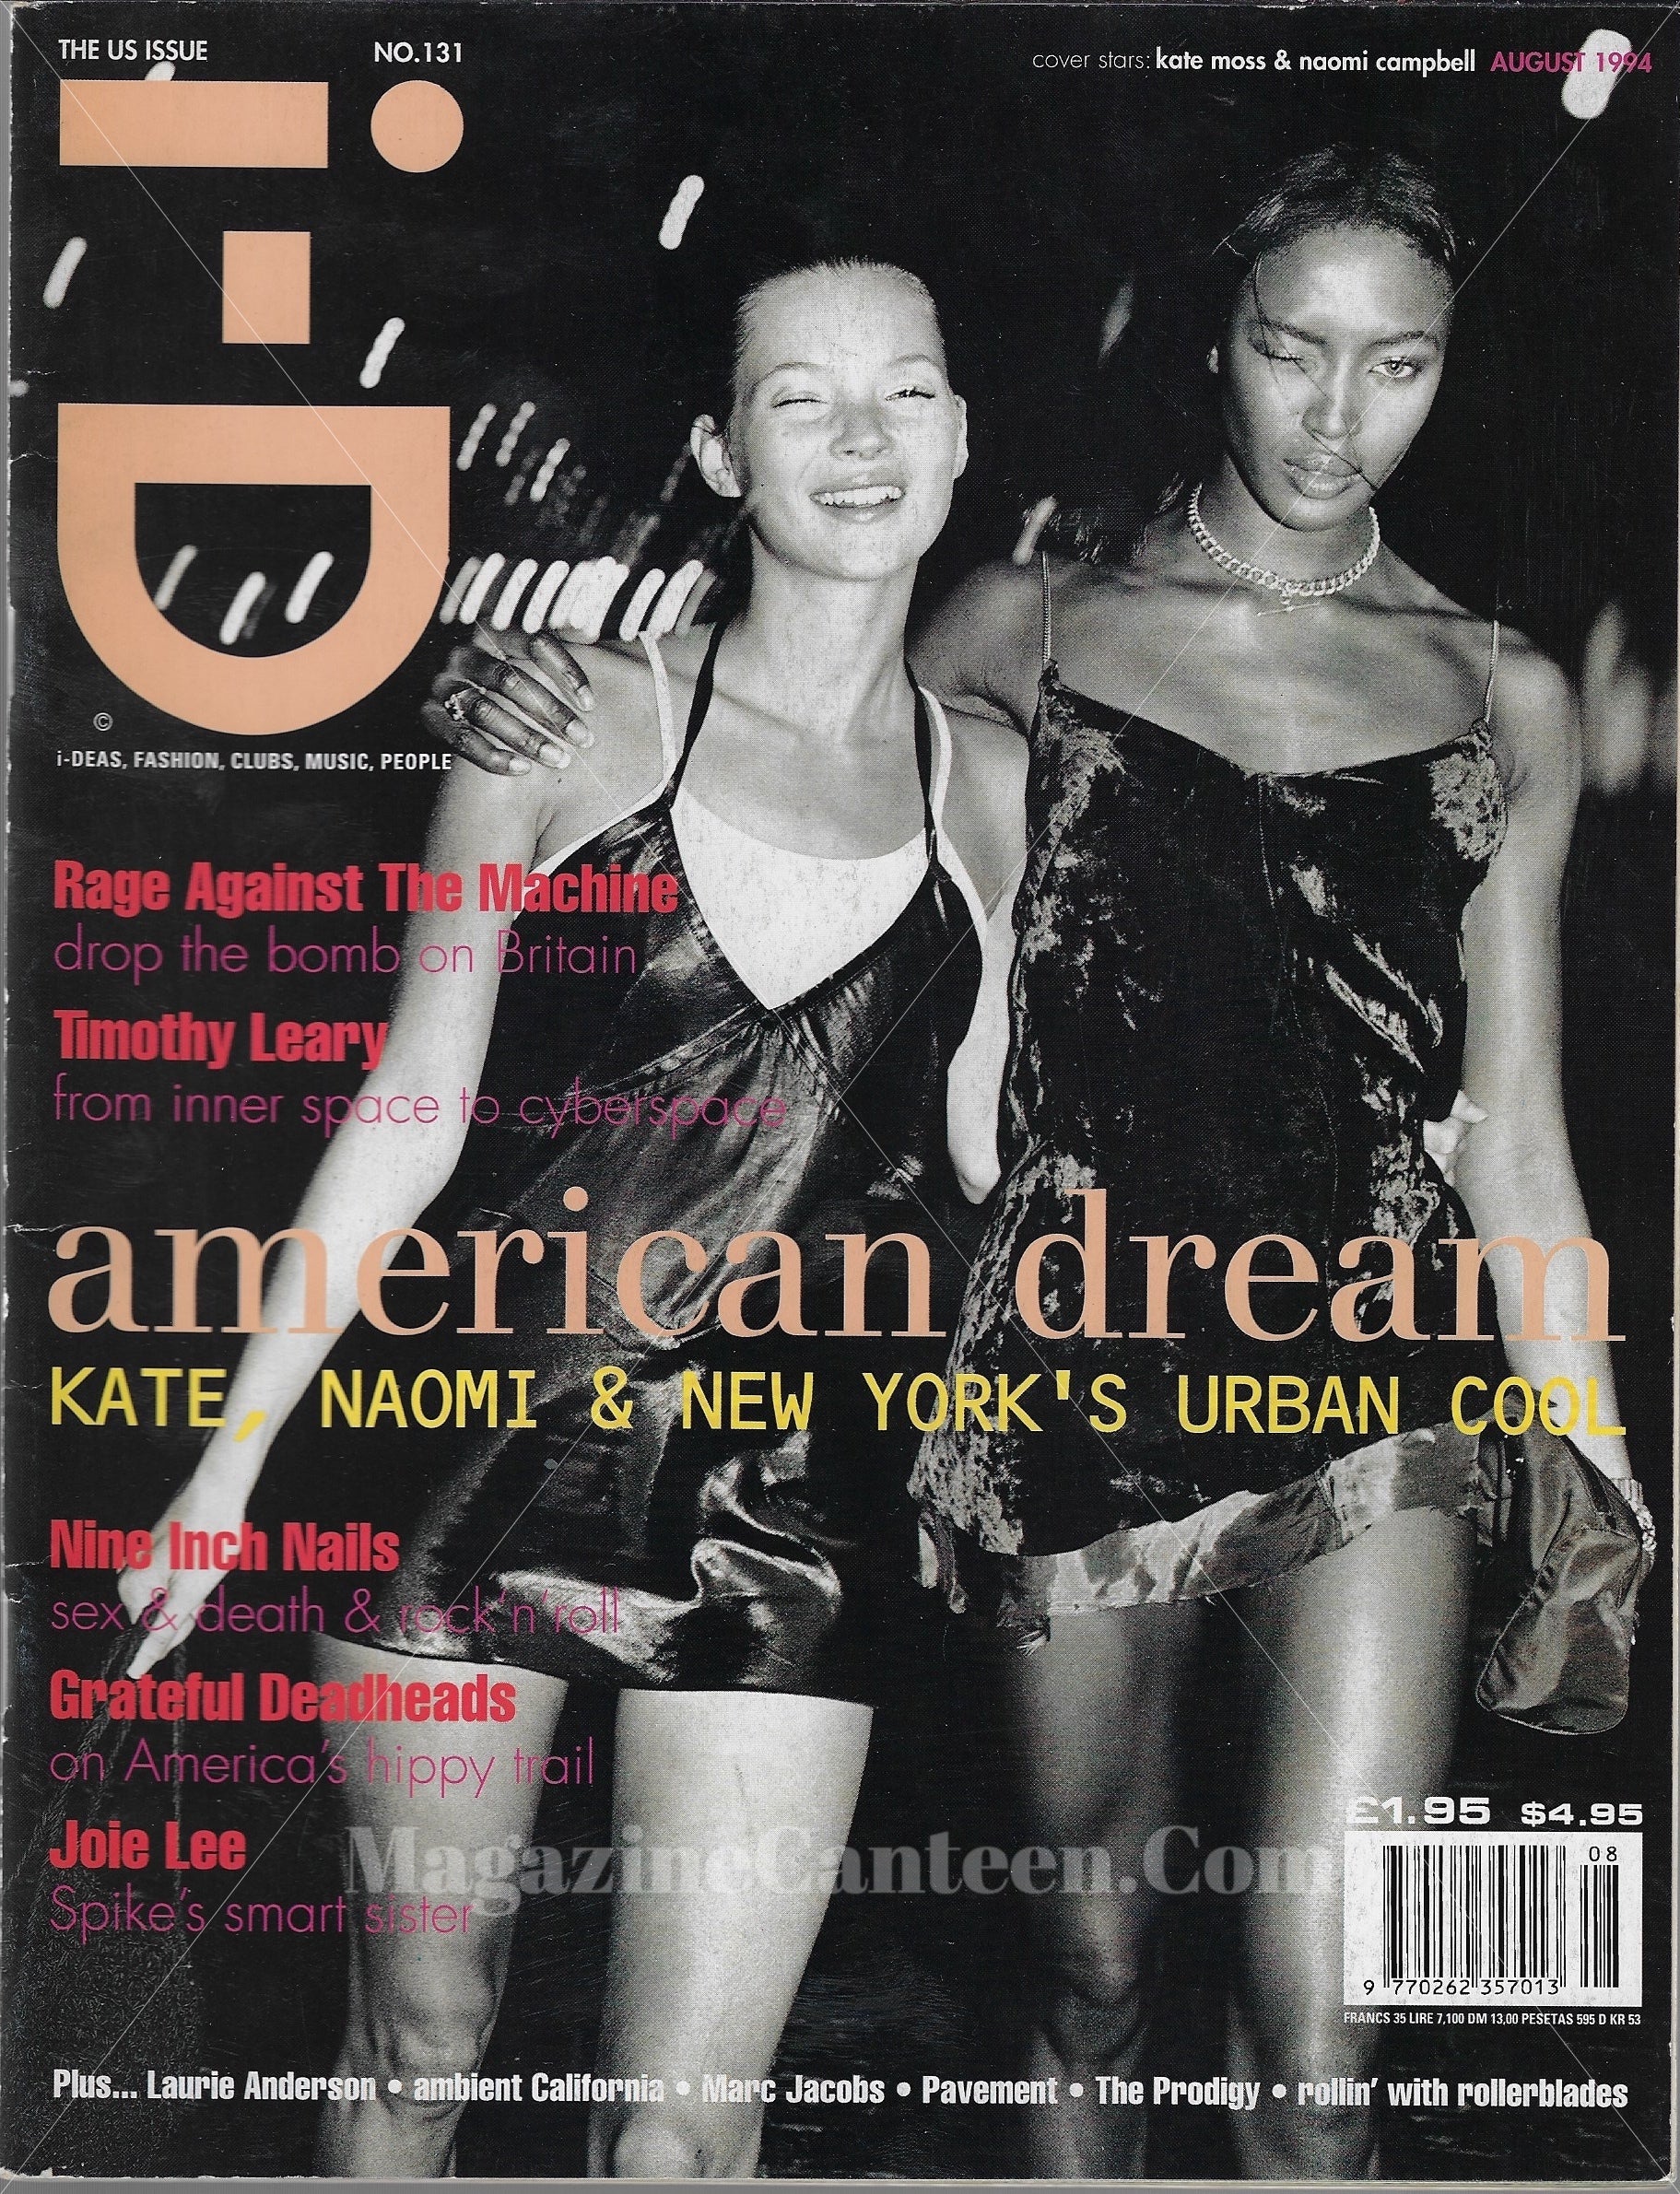 I-D Magazine 131 - Kate Moss & Naomi 1994